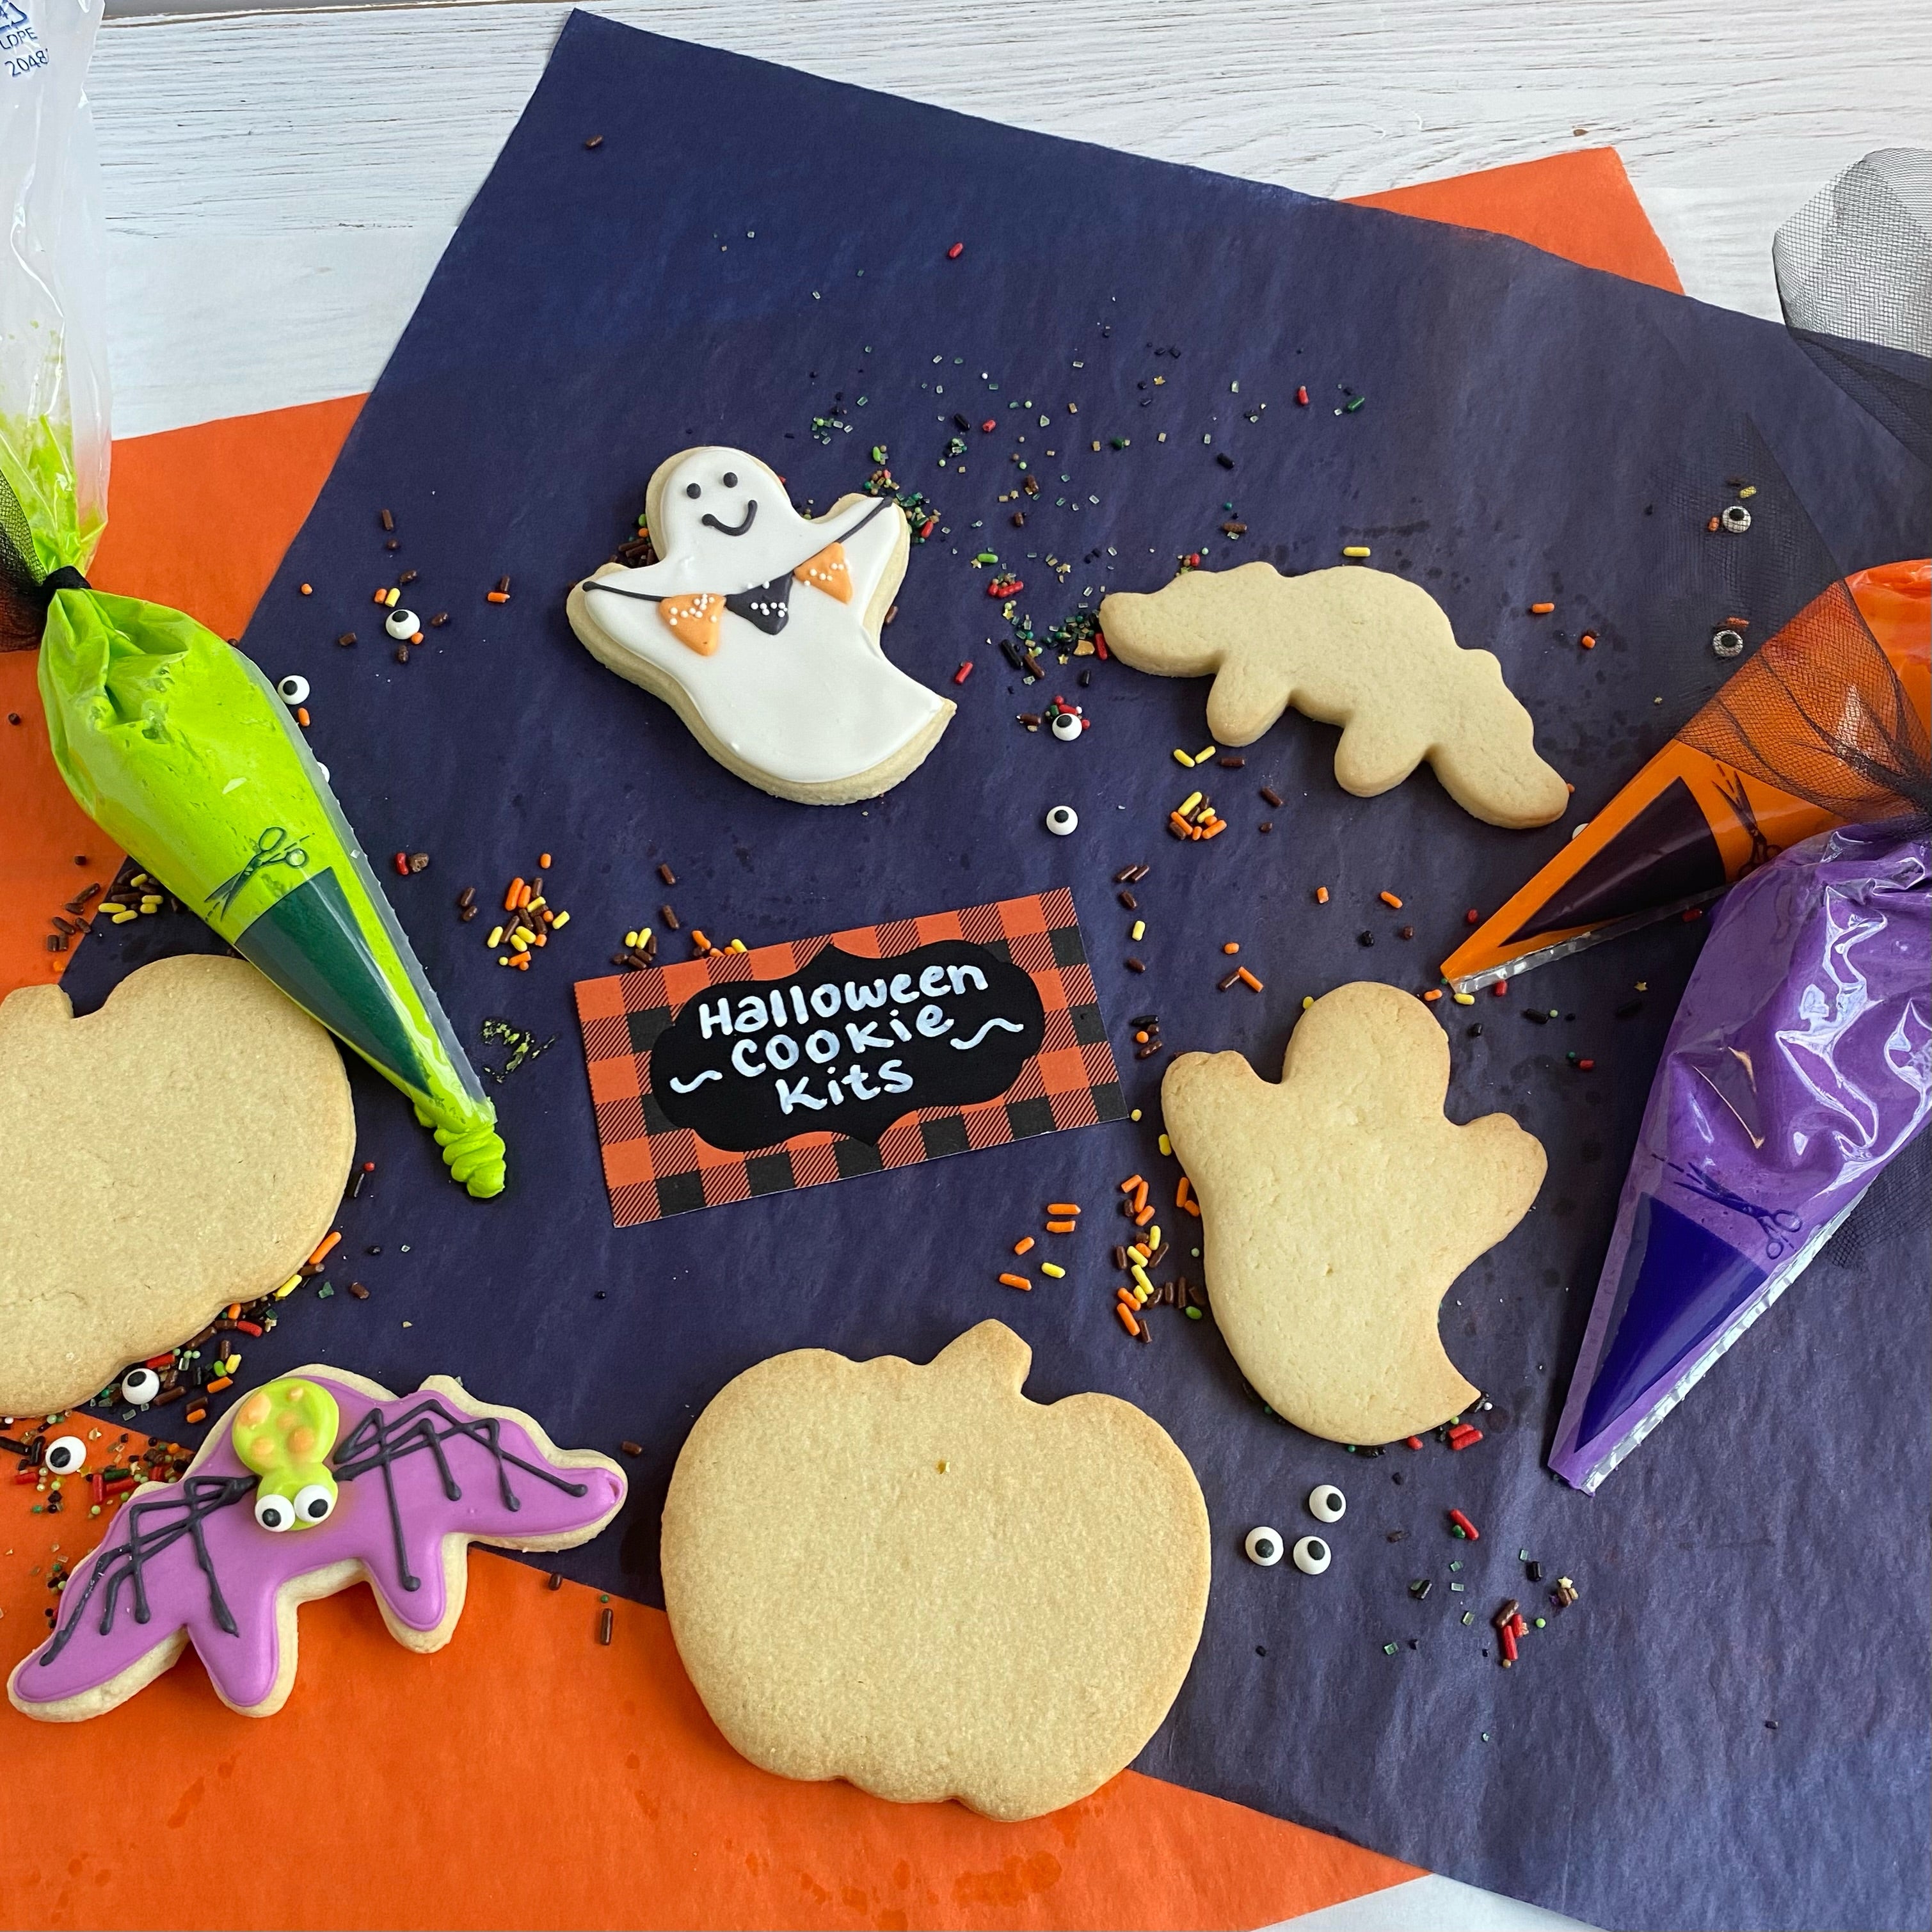 Halloween Sugar Cookie Decorating Kit